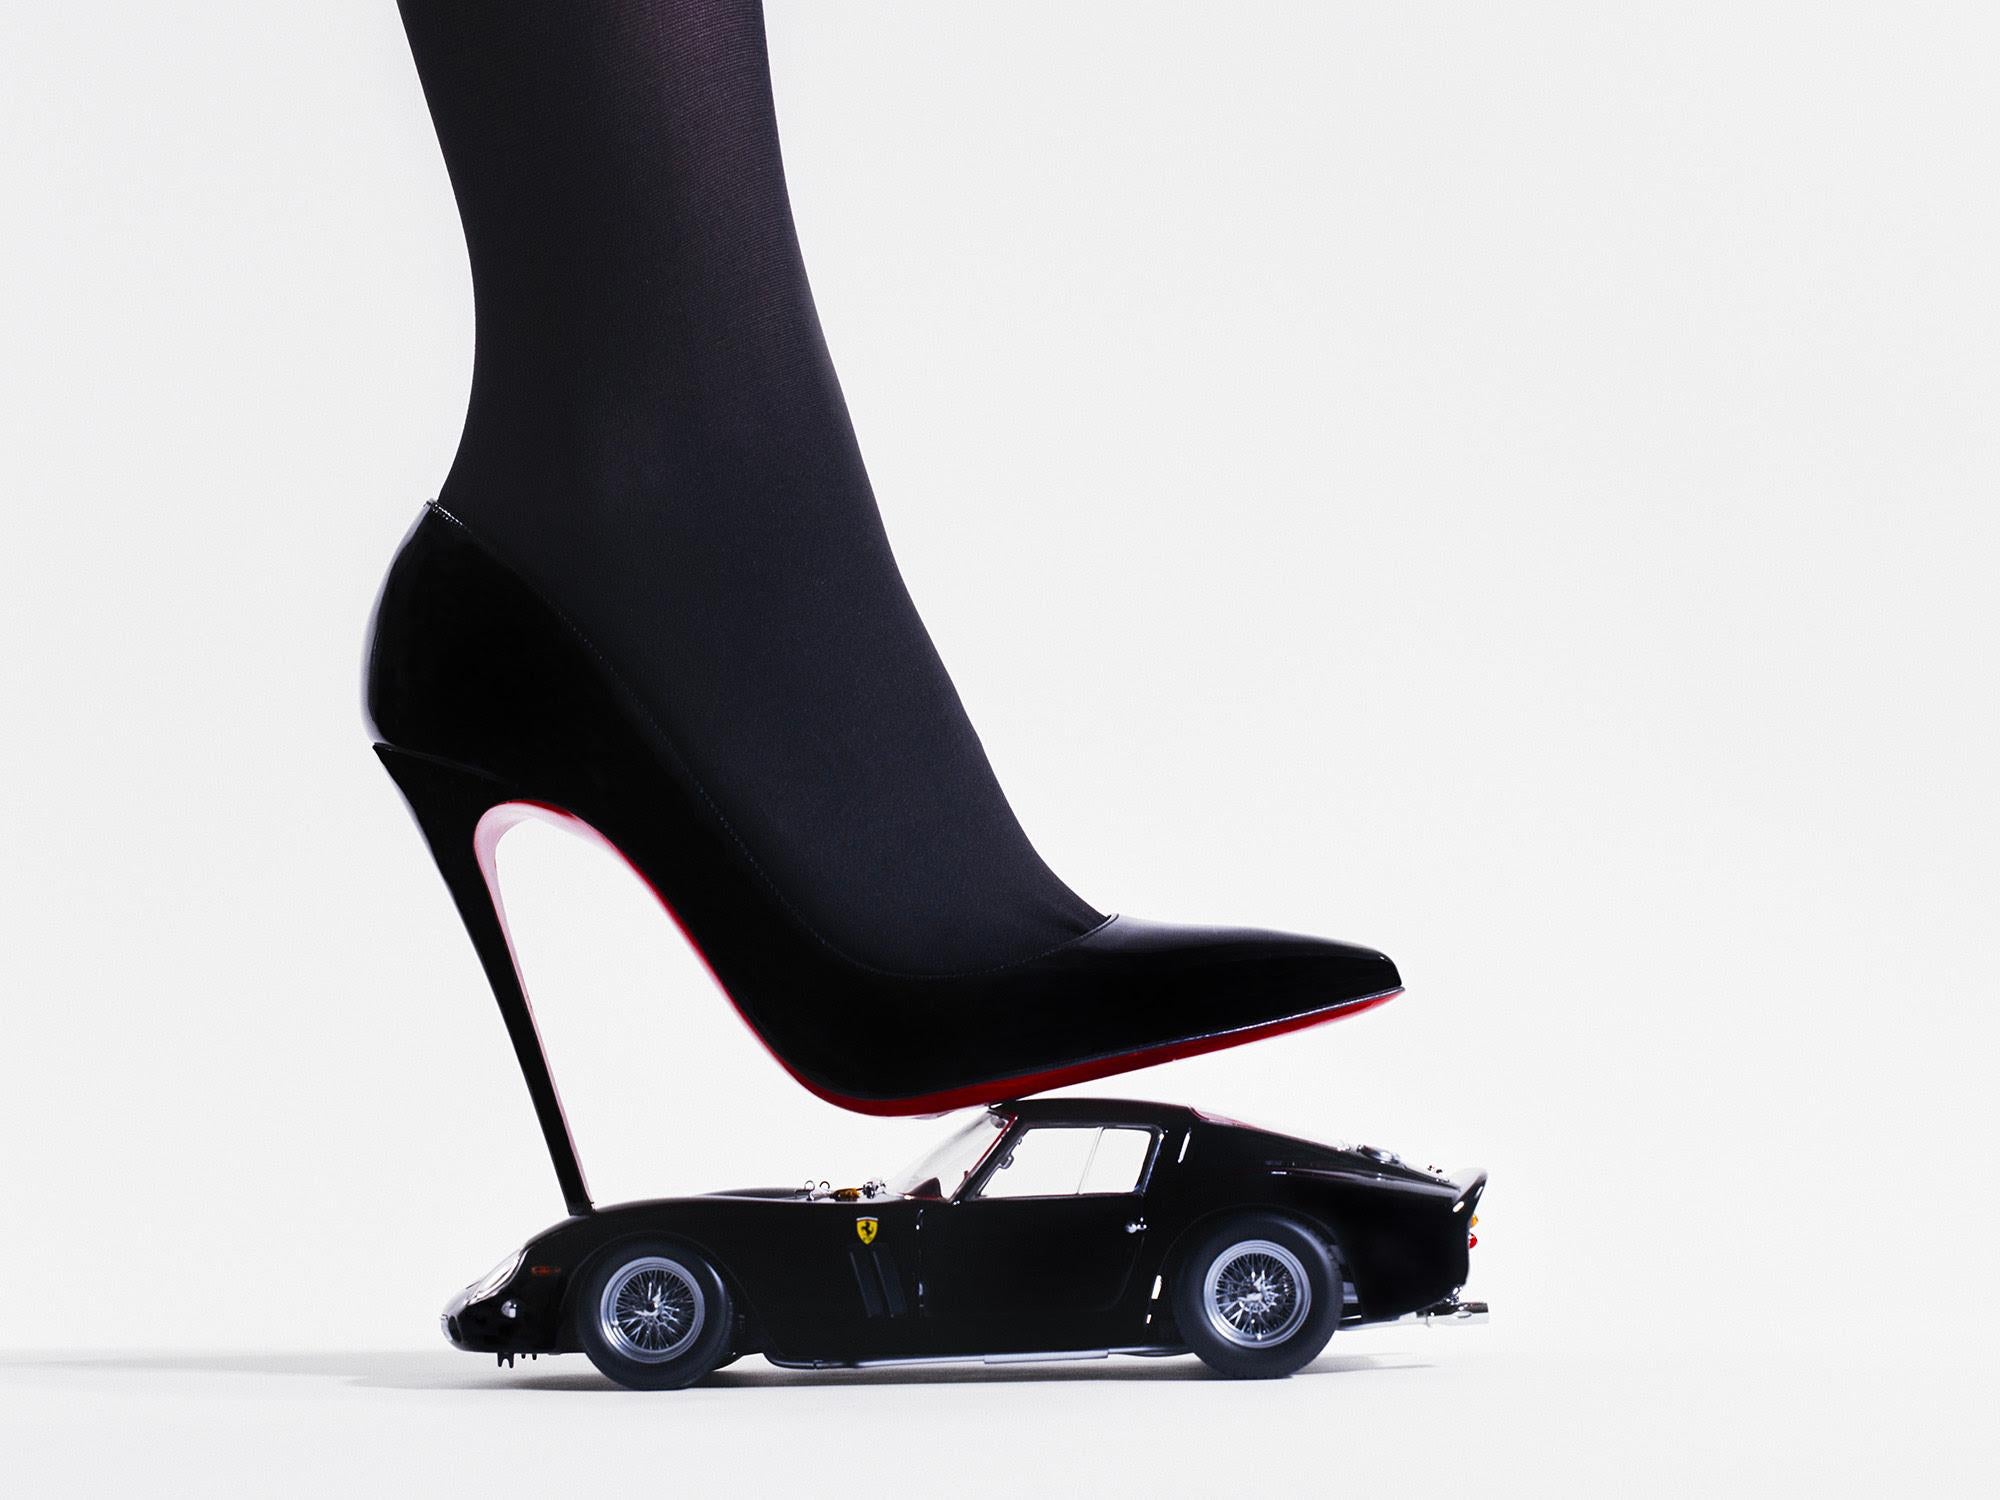 Tyler Shields Black and White Photograph - Ferrari High Heel (56" x 76")